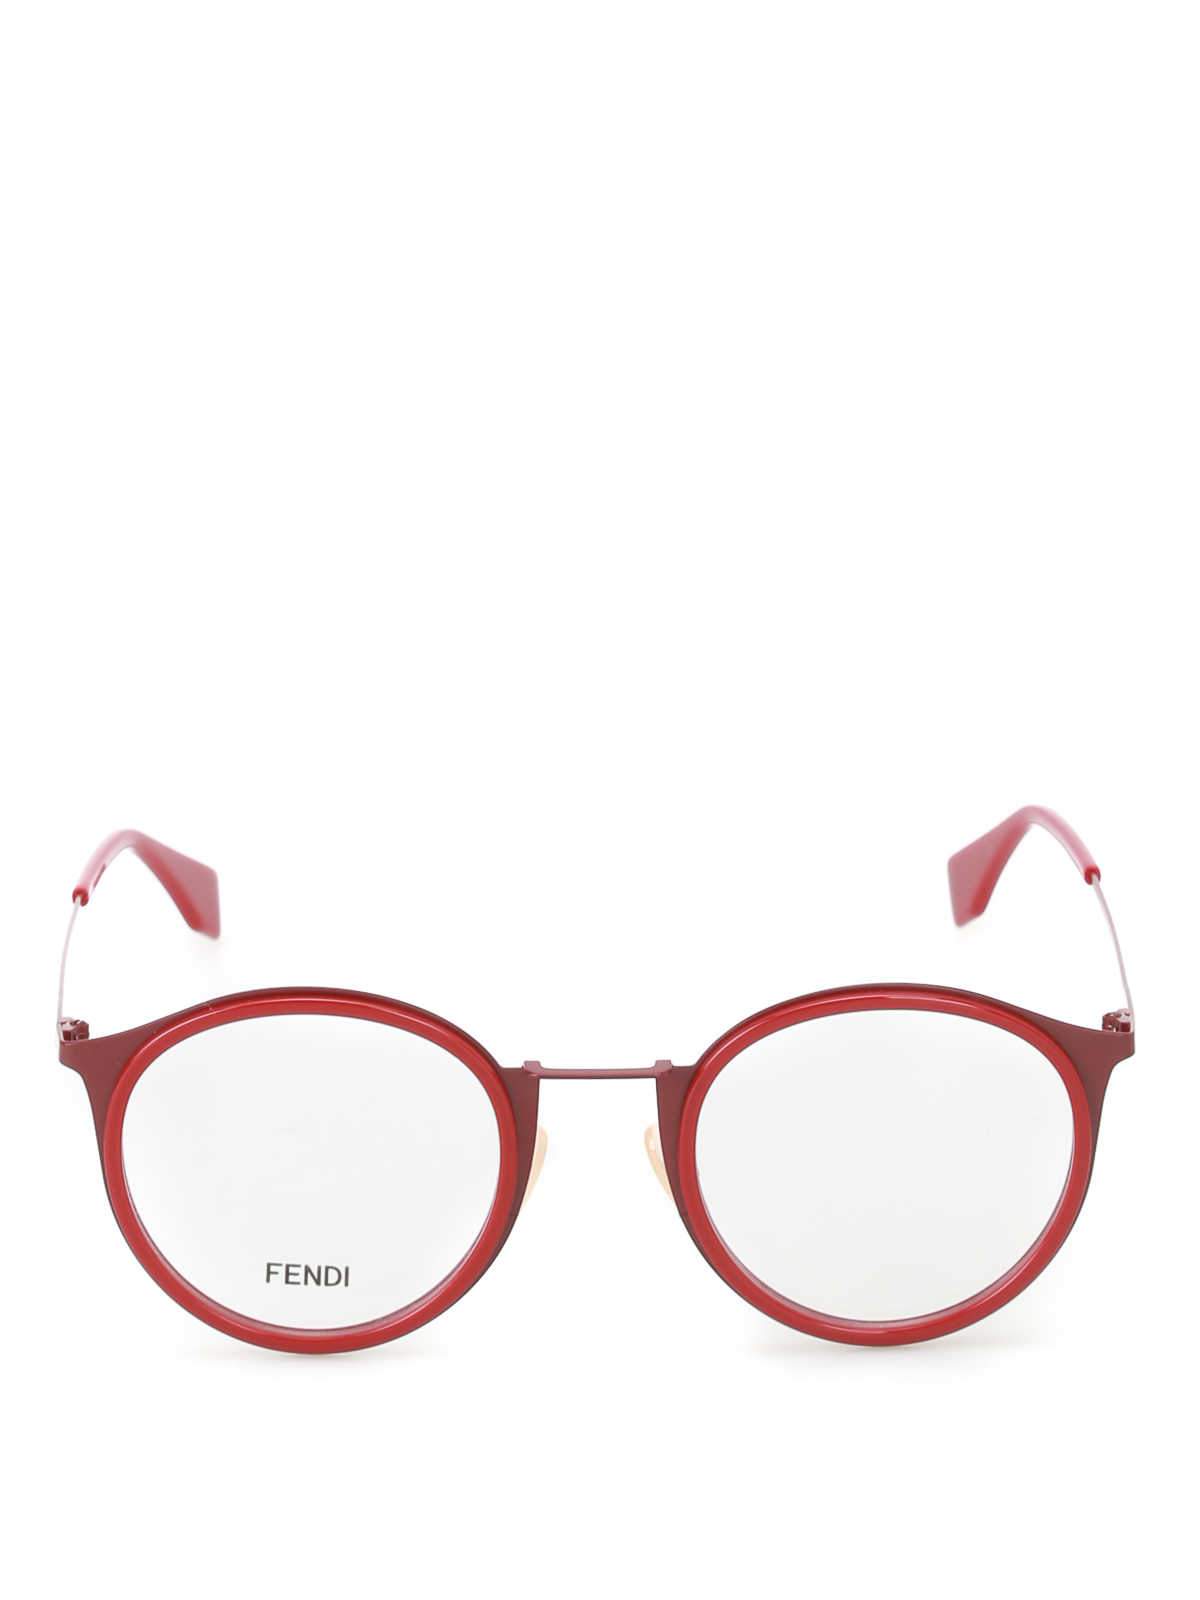 fendi red glasses